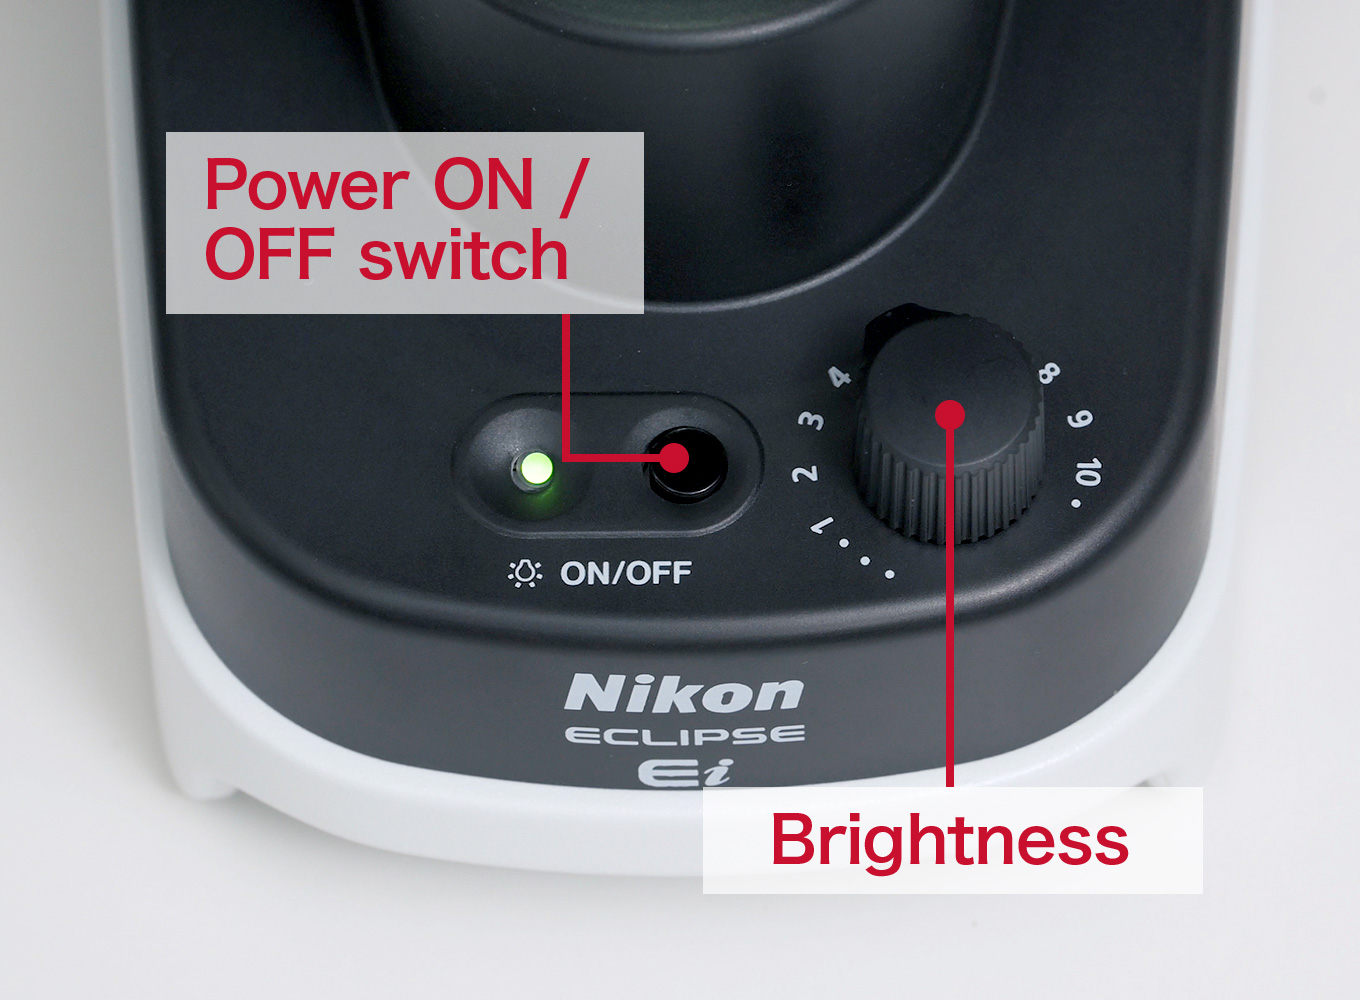 Adjust the brightness using the brightness control knob